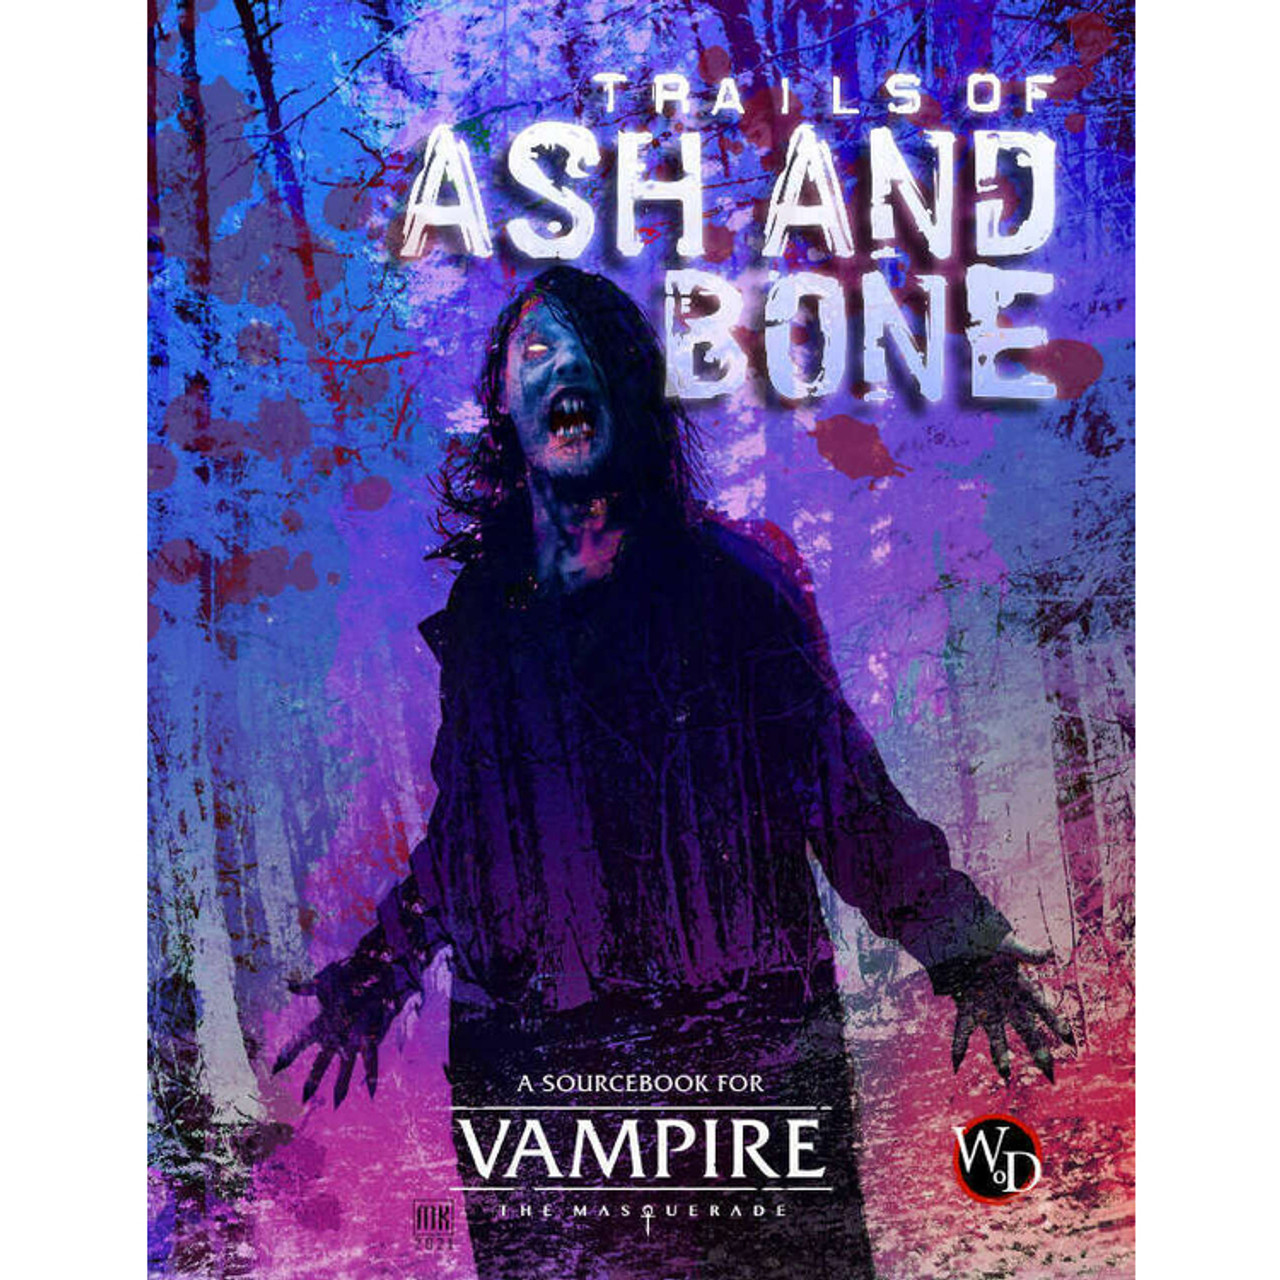 Pre-Order the 5th edition of Vampire: The Masquerade